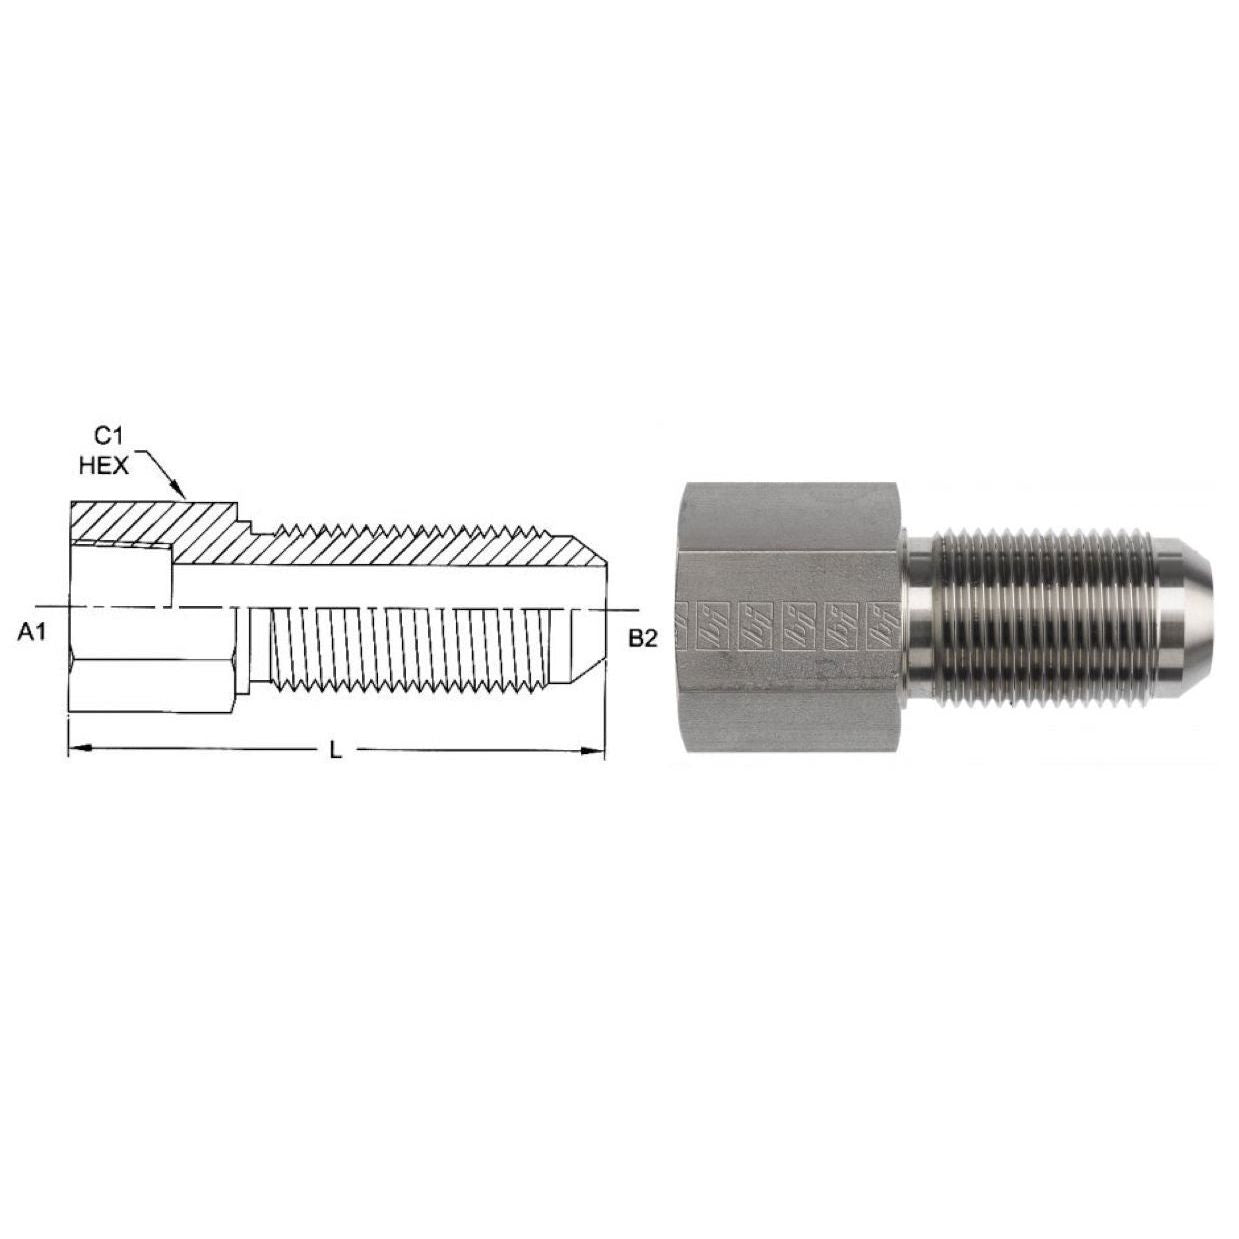 2705-20-20 : OneHydraulics Bulkhead Adapter, Straight, 1.25 (1-1/4") JIC JIC x 1.25 (1-1/4") Male, Steel, 2500psi